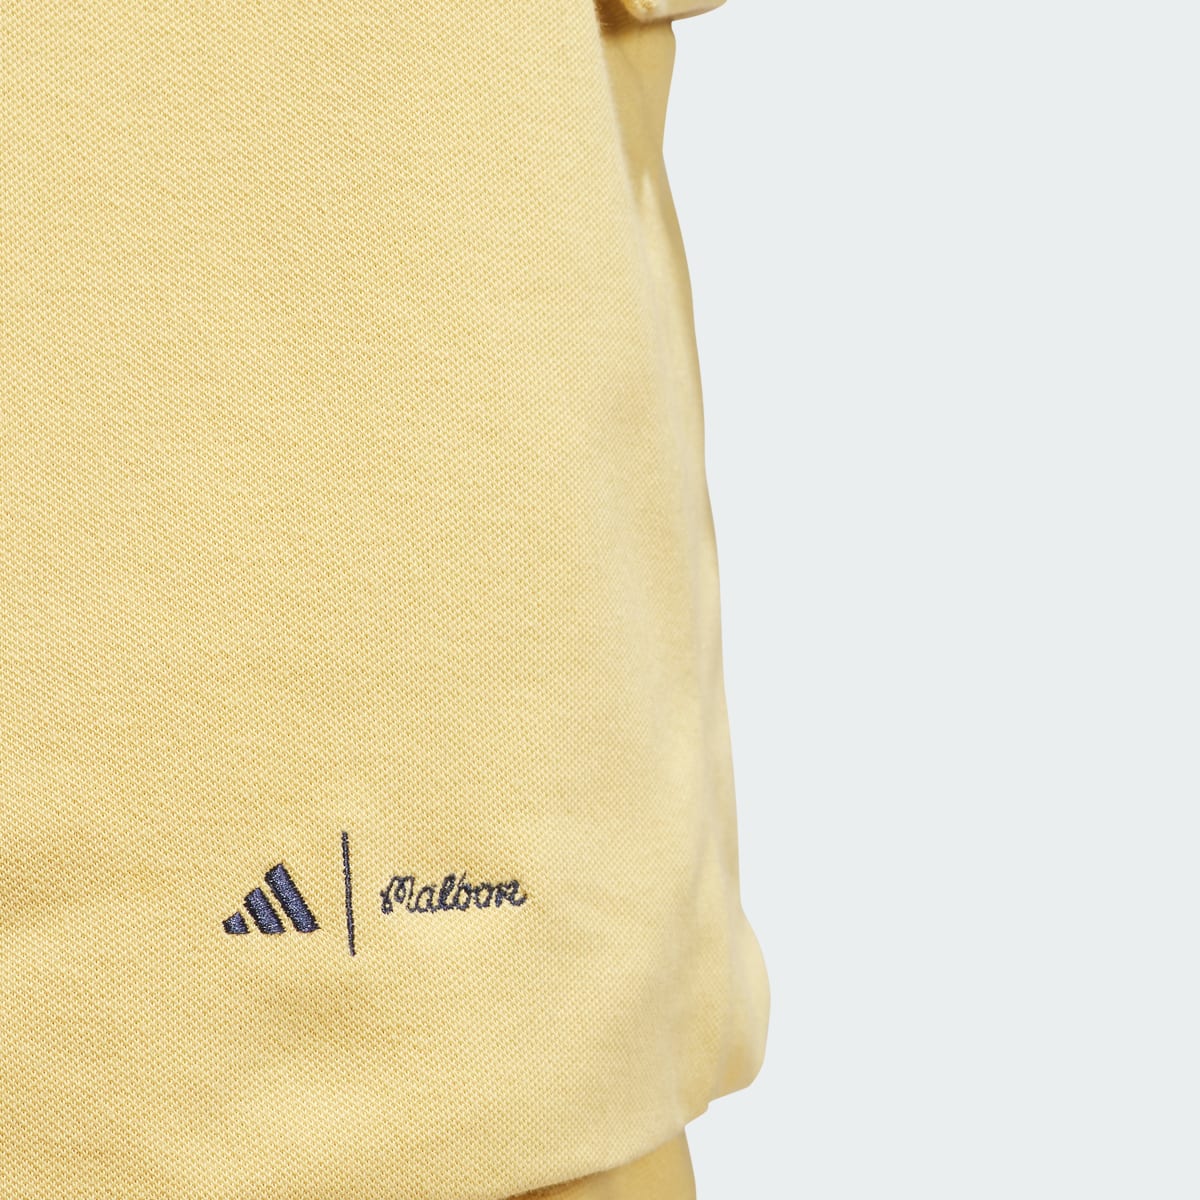 Adidas x Malbon Sport Coat. 8